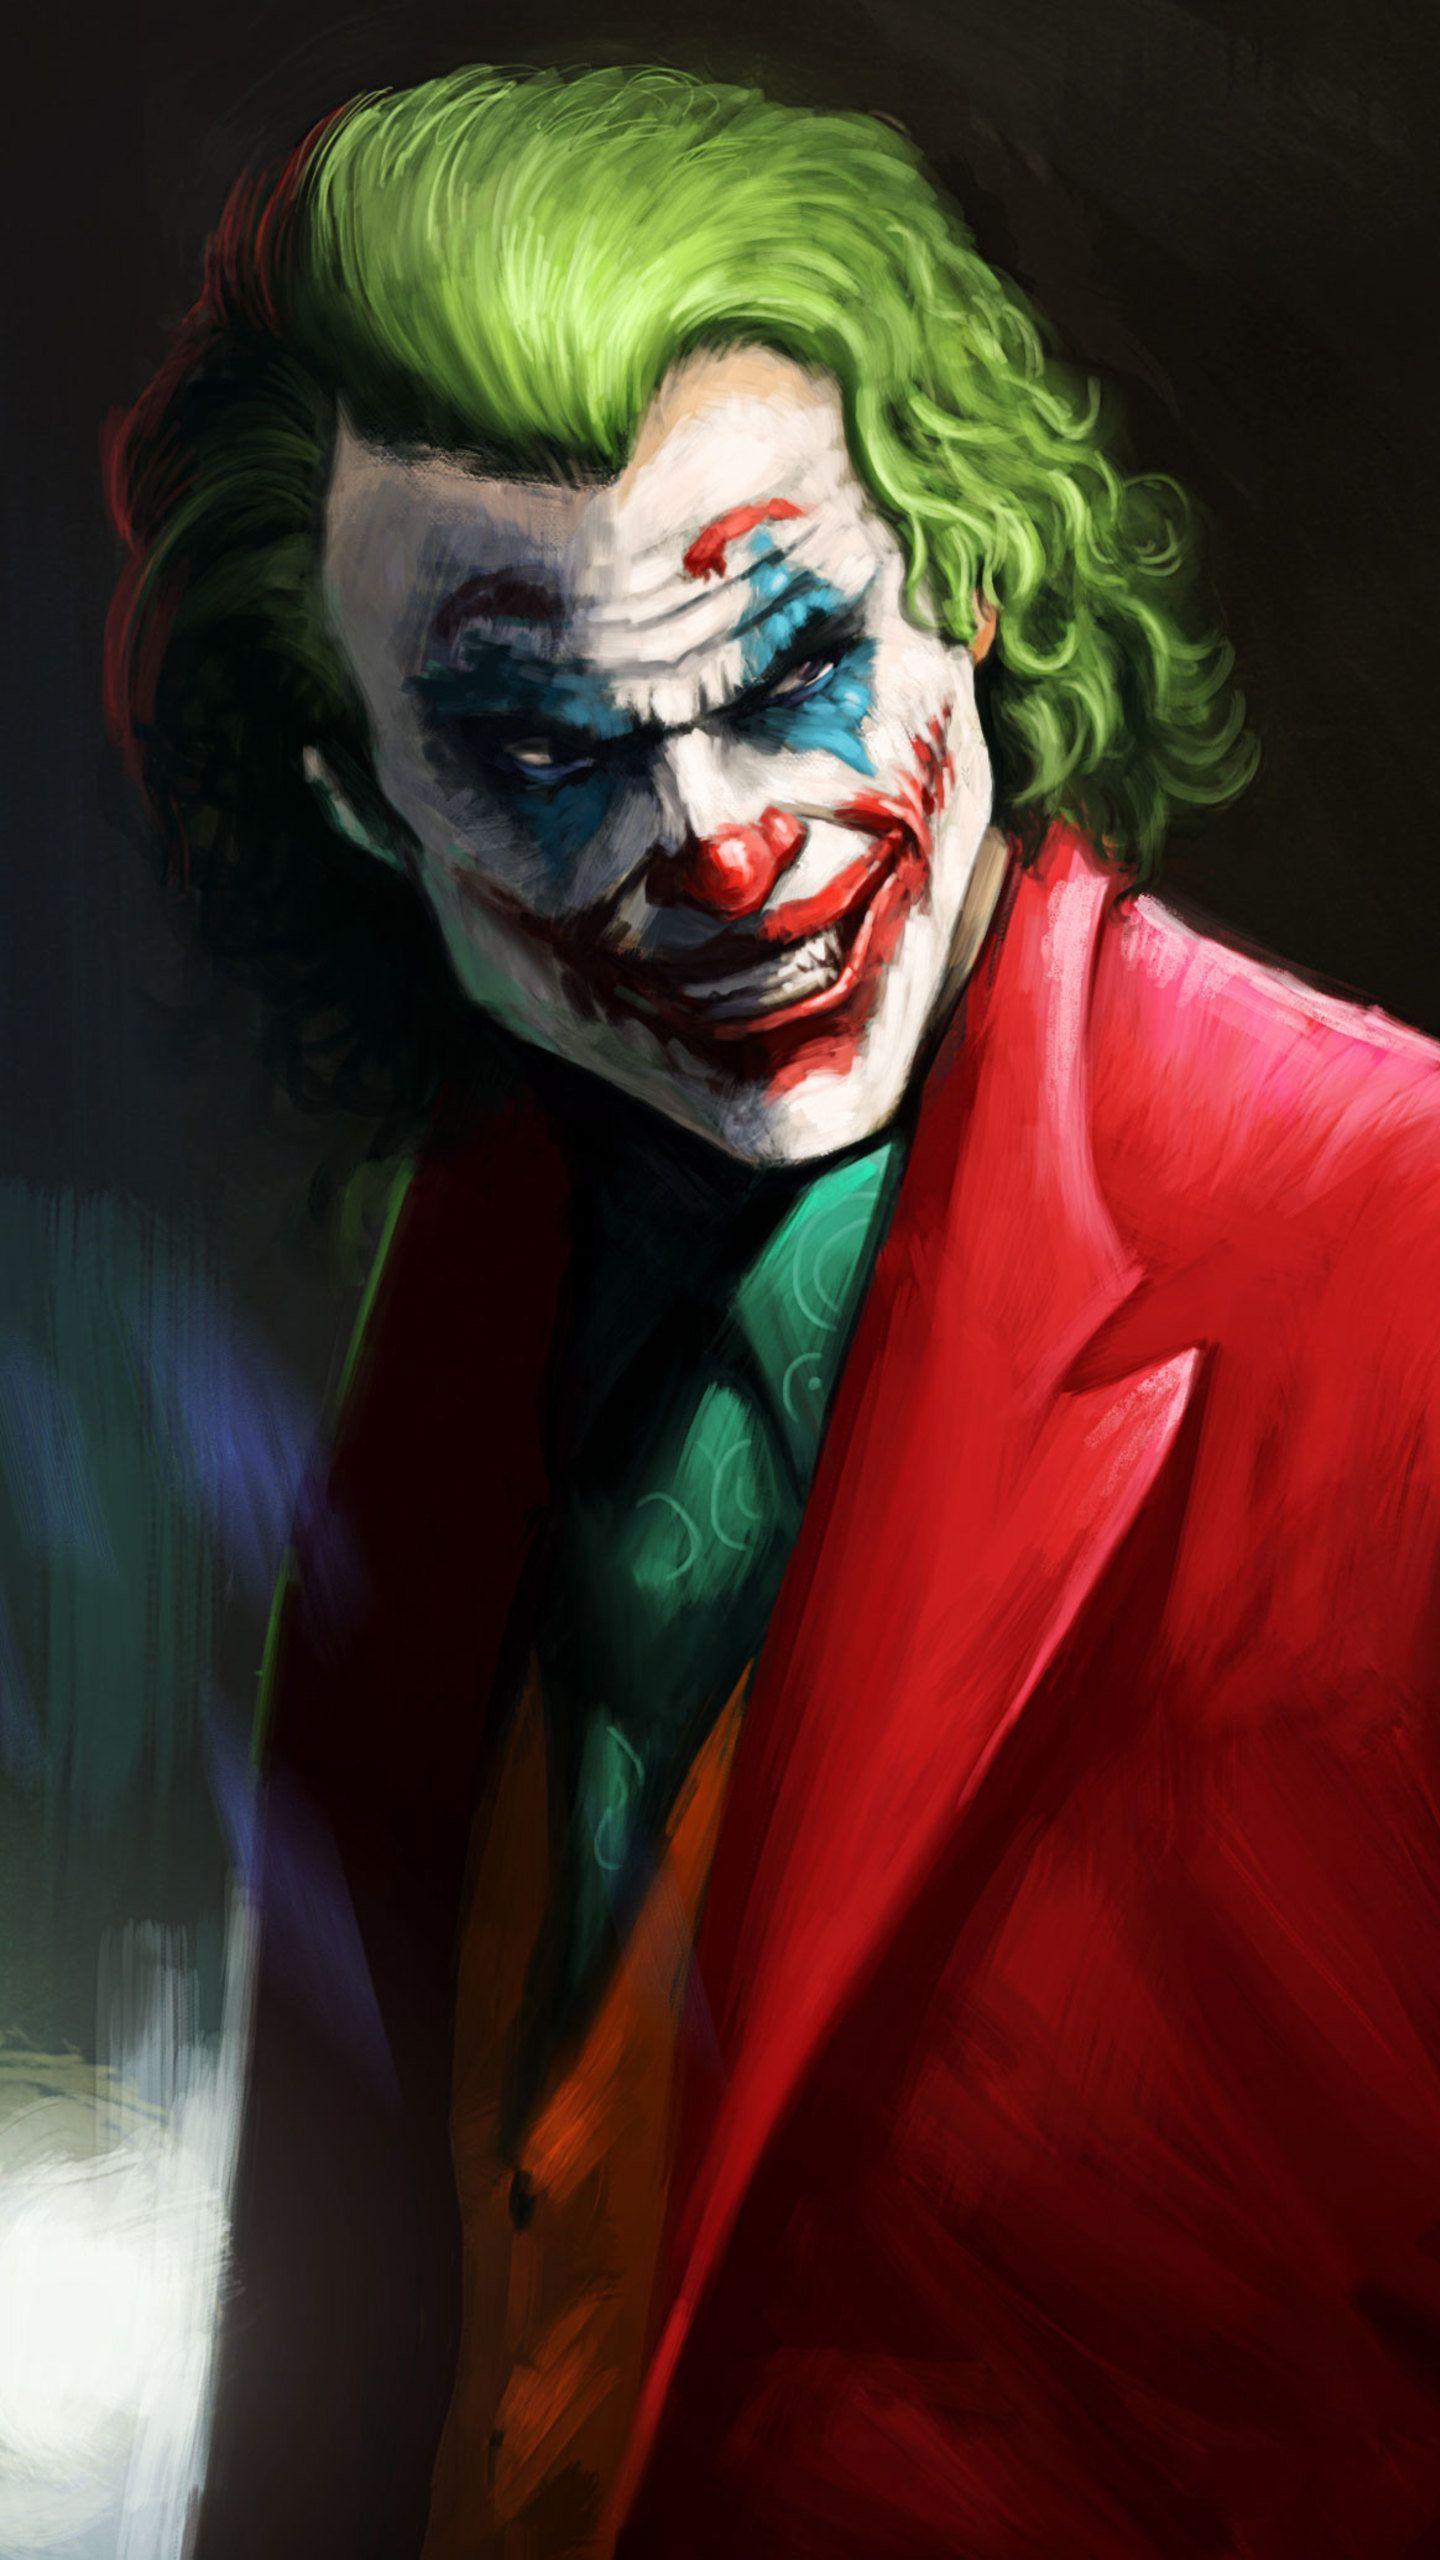 Joker New Year Wallpapers - Top Free Joker New Year Backgrounds ...